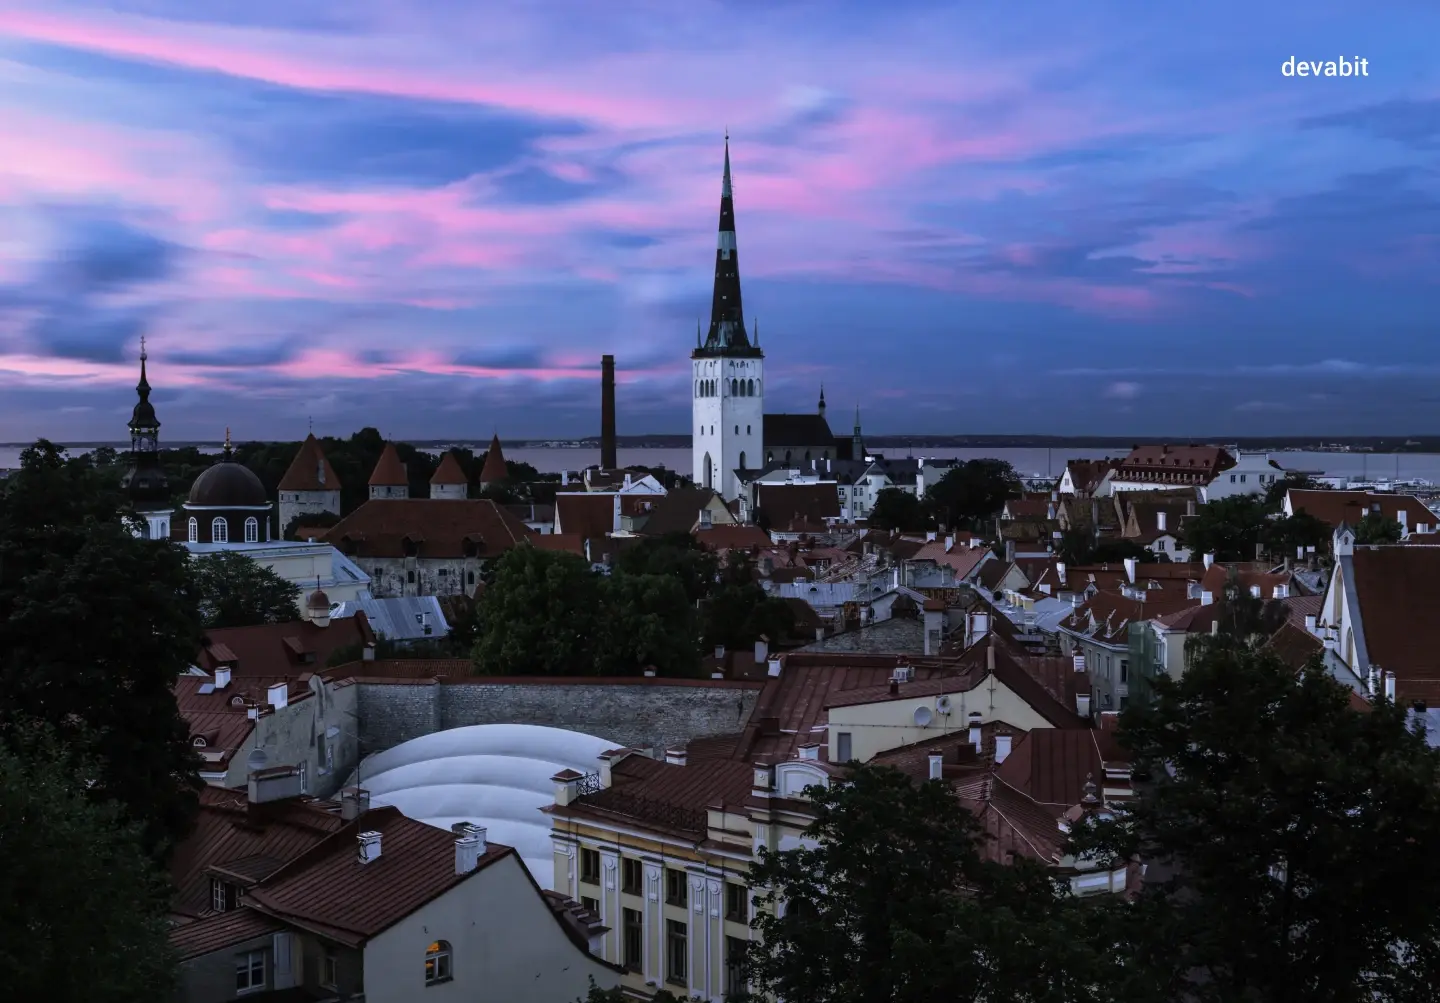 Hire developers in Estonia: General Information